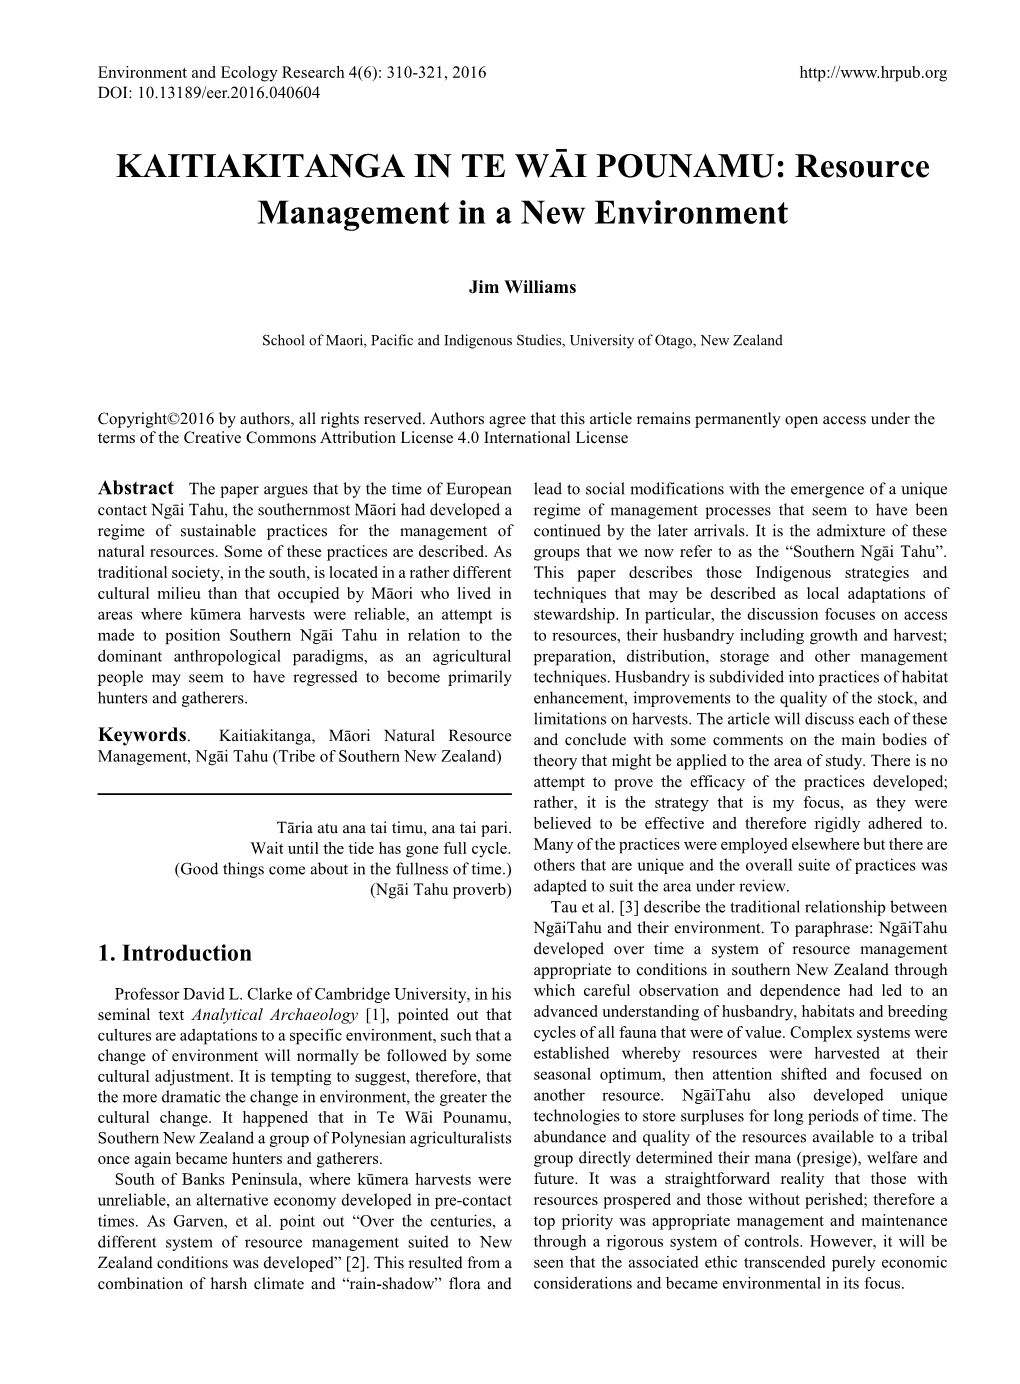 KAITIAKITANGA in TE WĀI POUNAMU: Resource Management in a New Environment